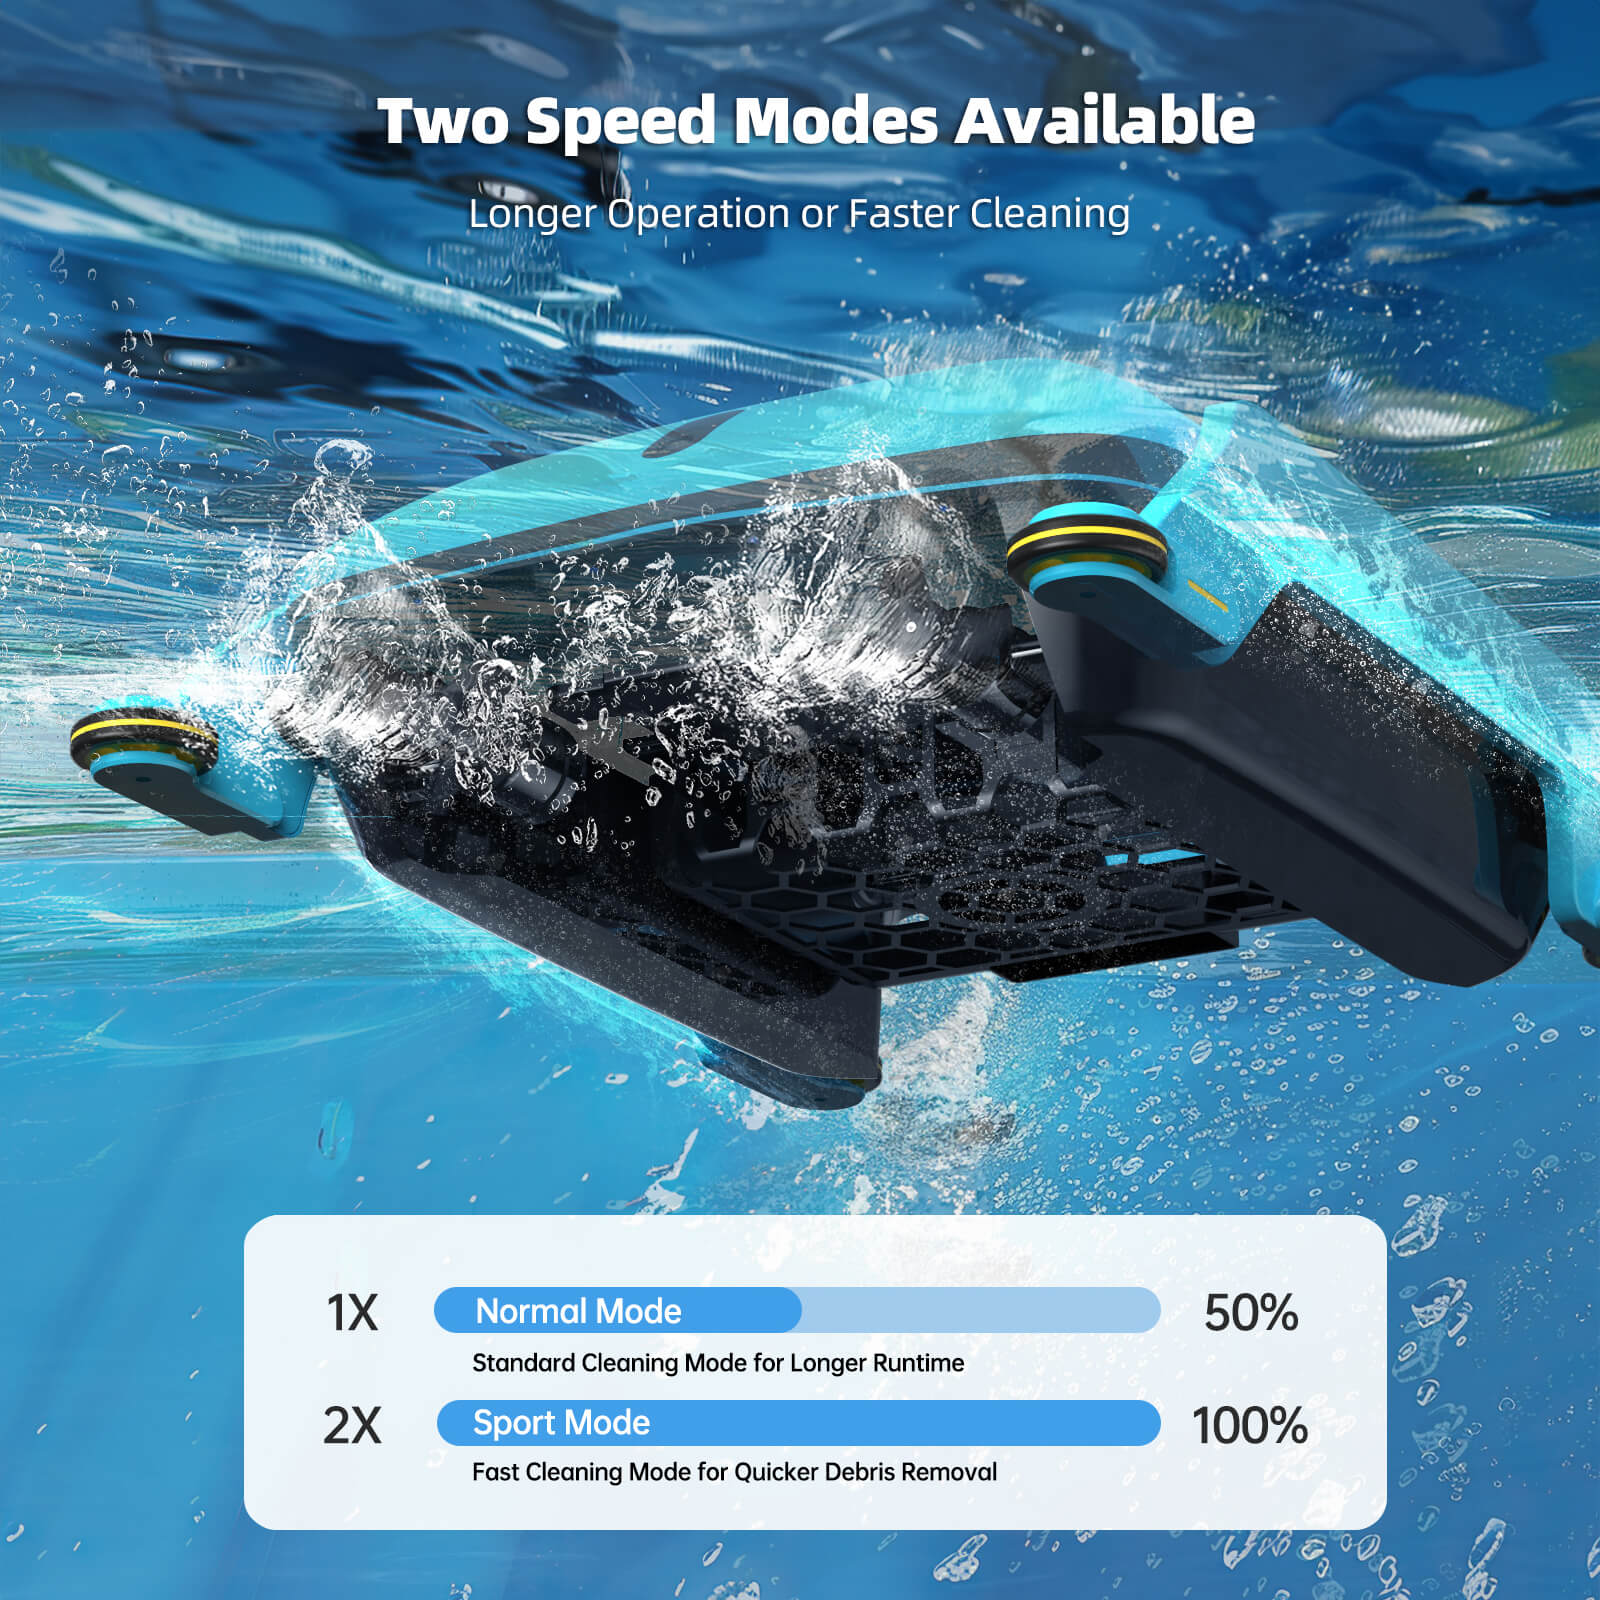 Smonet SR5 robotic pool skimmer-Two Speed Modes AvailableLonger Operation or Faster Cleaning